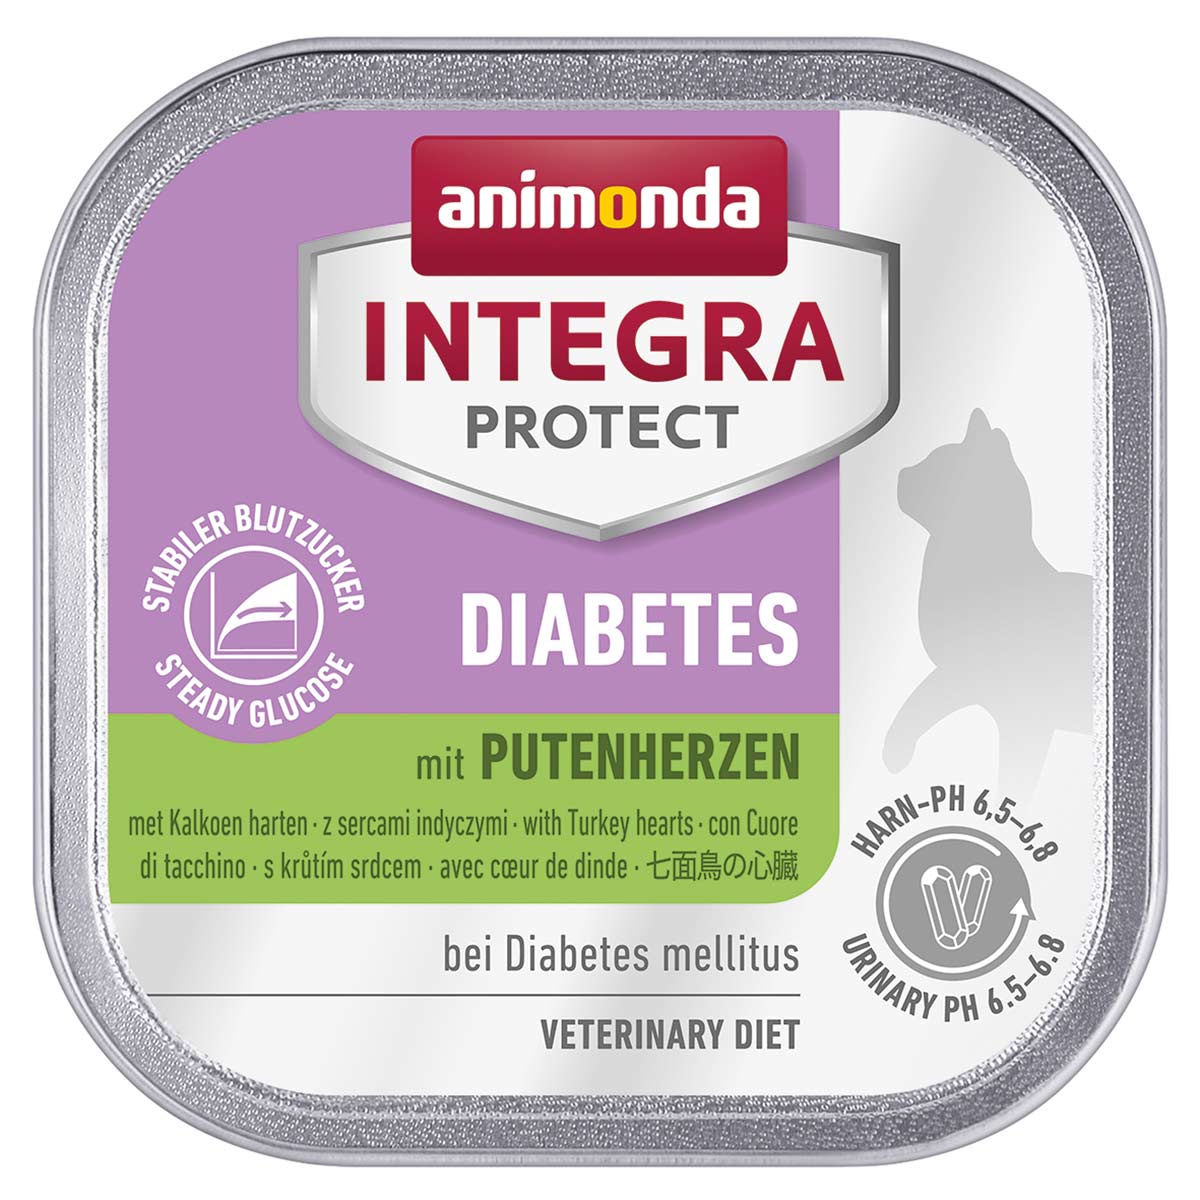 animonda INTEGRA PROTECT Diabetes mit Putenherzen 16x100g